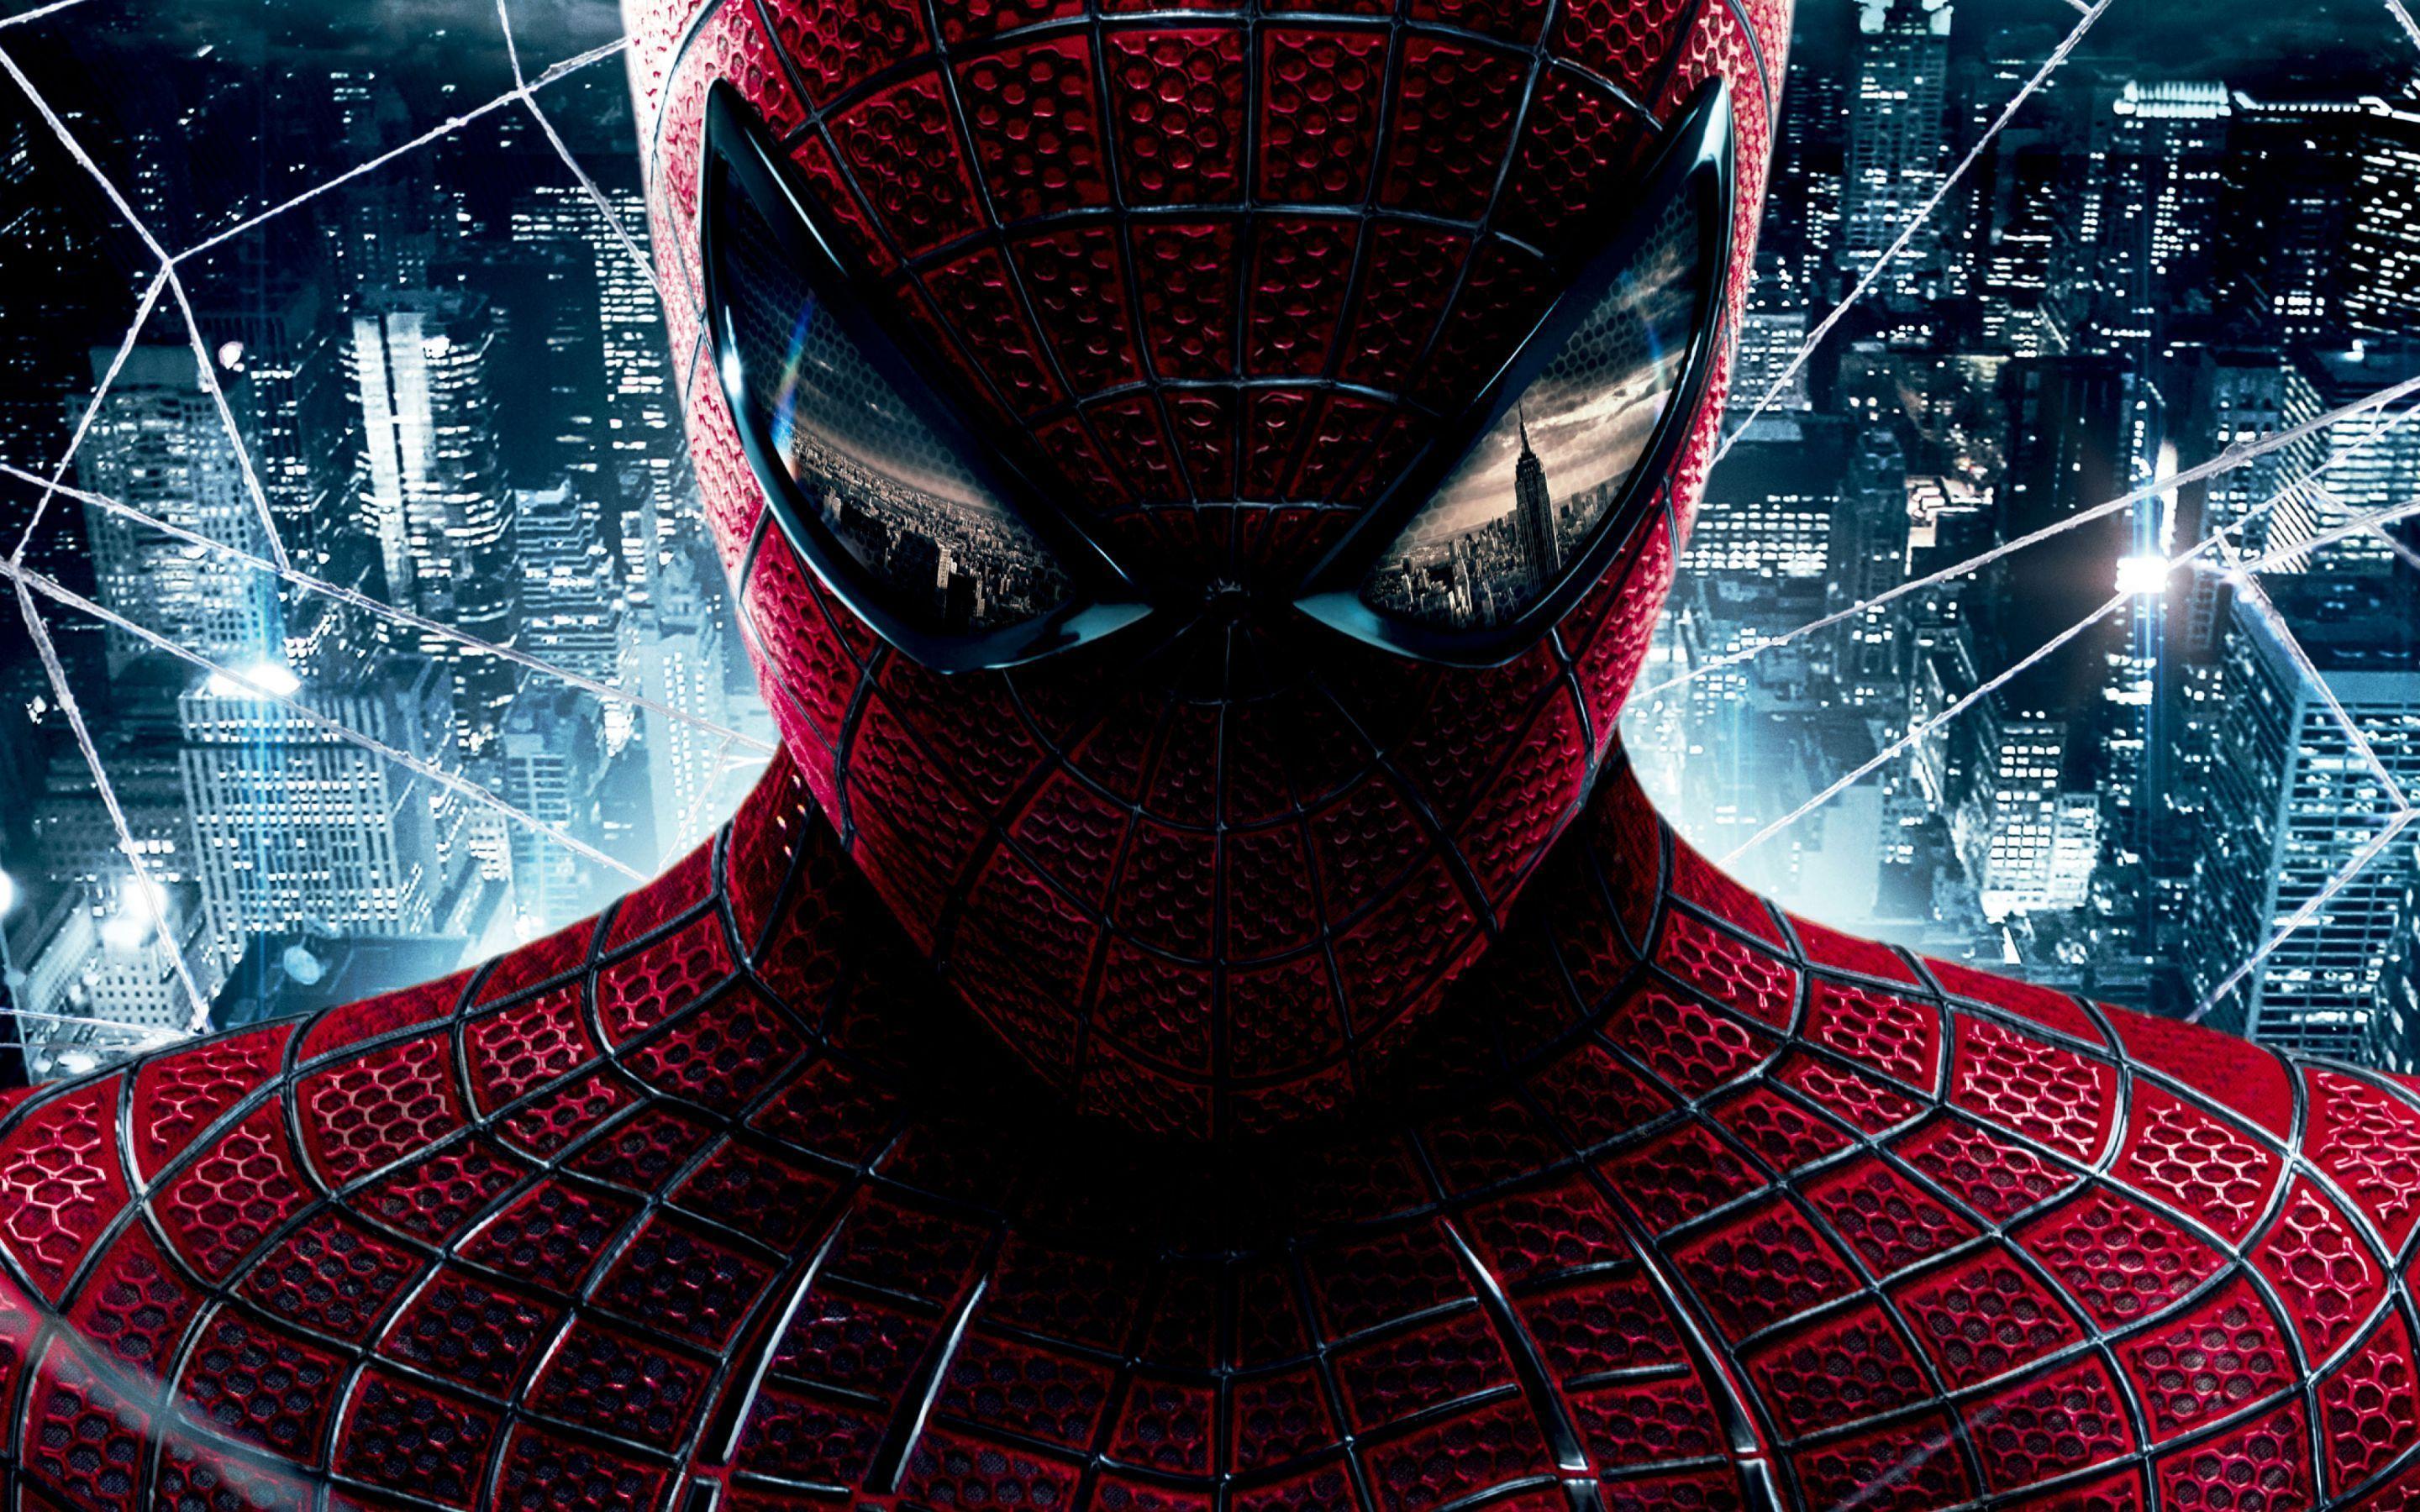 Spiderman HD Wallpaper. Spiderman Image Free